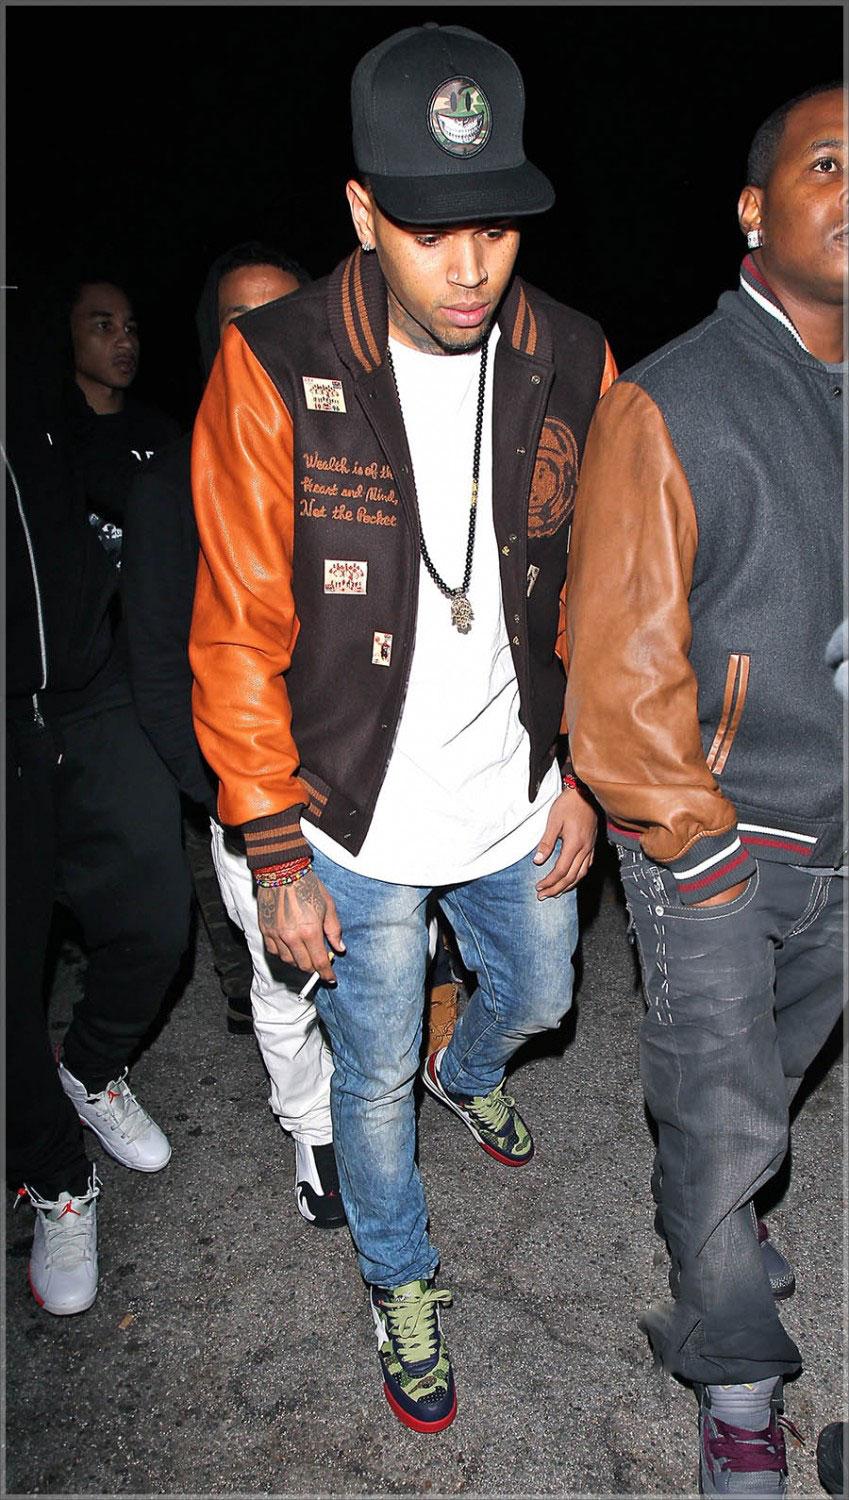 BAPE Man Logo - Men's Fashion Flash: Chris Brown's Supper Club Billionaire Boys Club ...